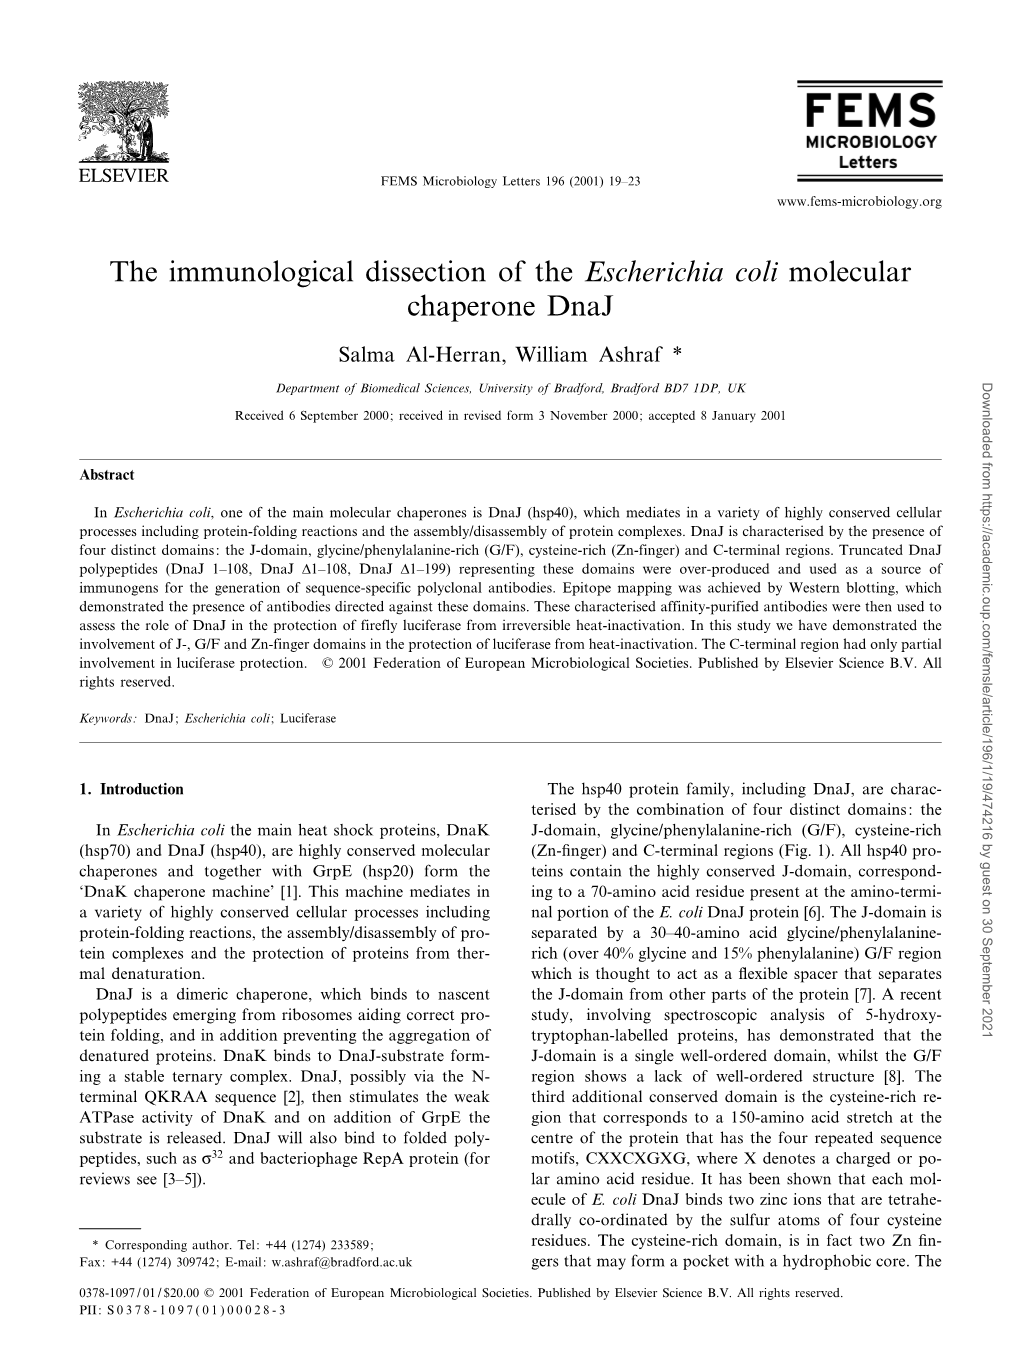 The Immunological Dissection of the Escherichia Coli Molecular Chaperone Dnaj